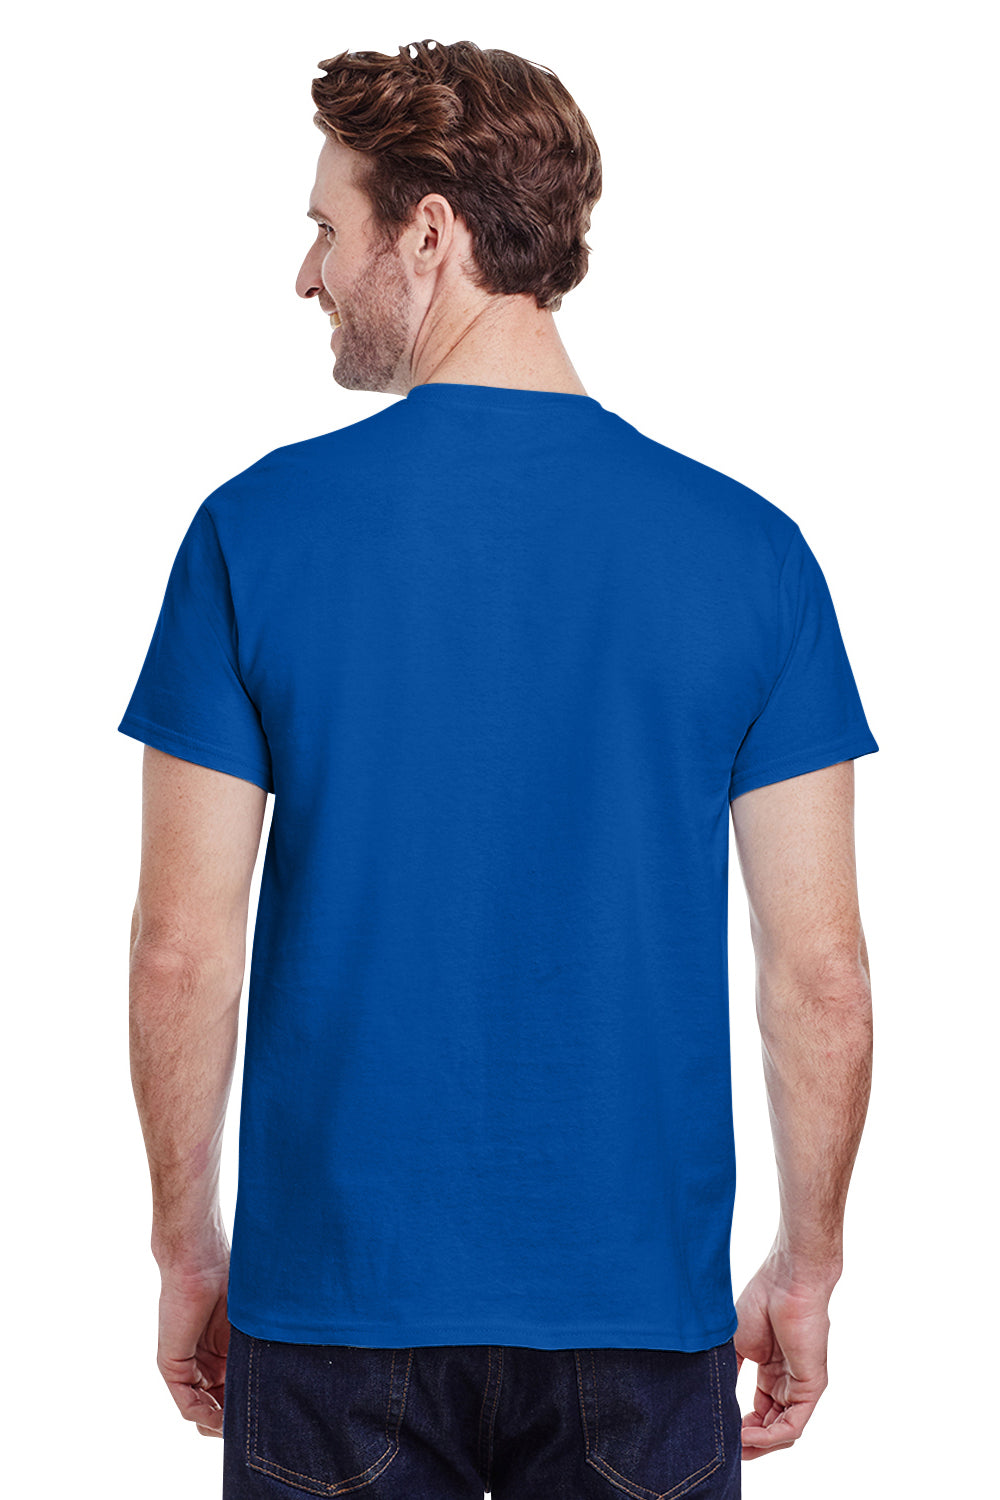 Gildan G200 Mens Ultra Short Sleeve Crewneck T-Shirt Antique Royal Blue Back